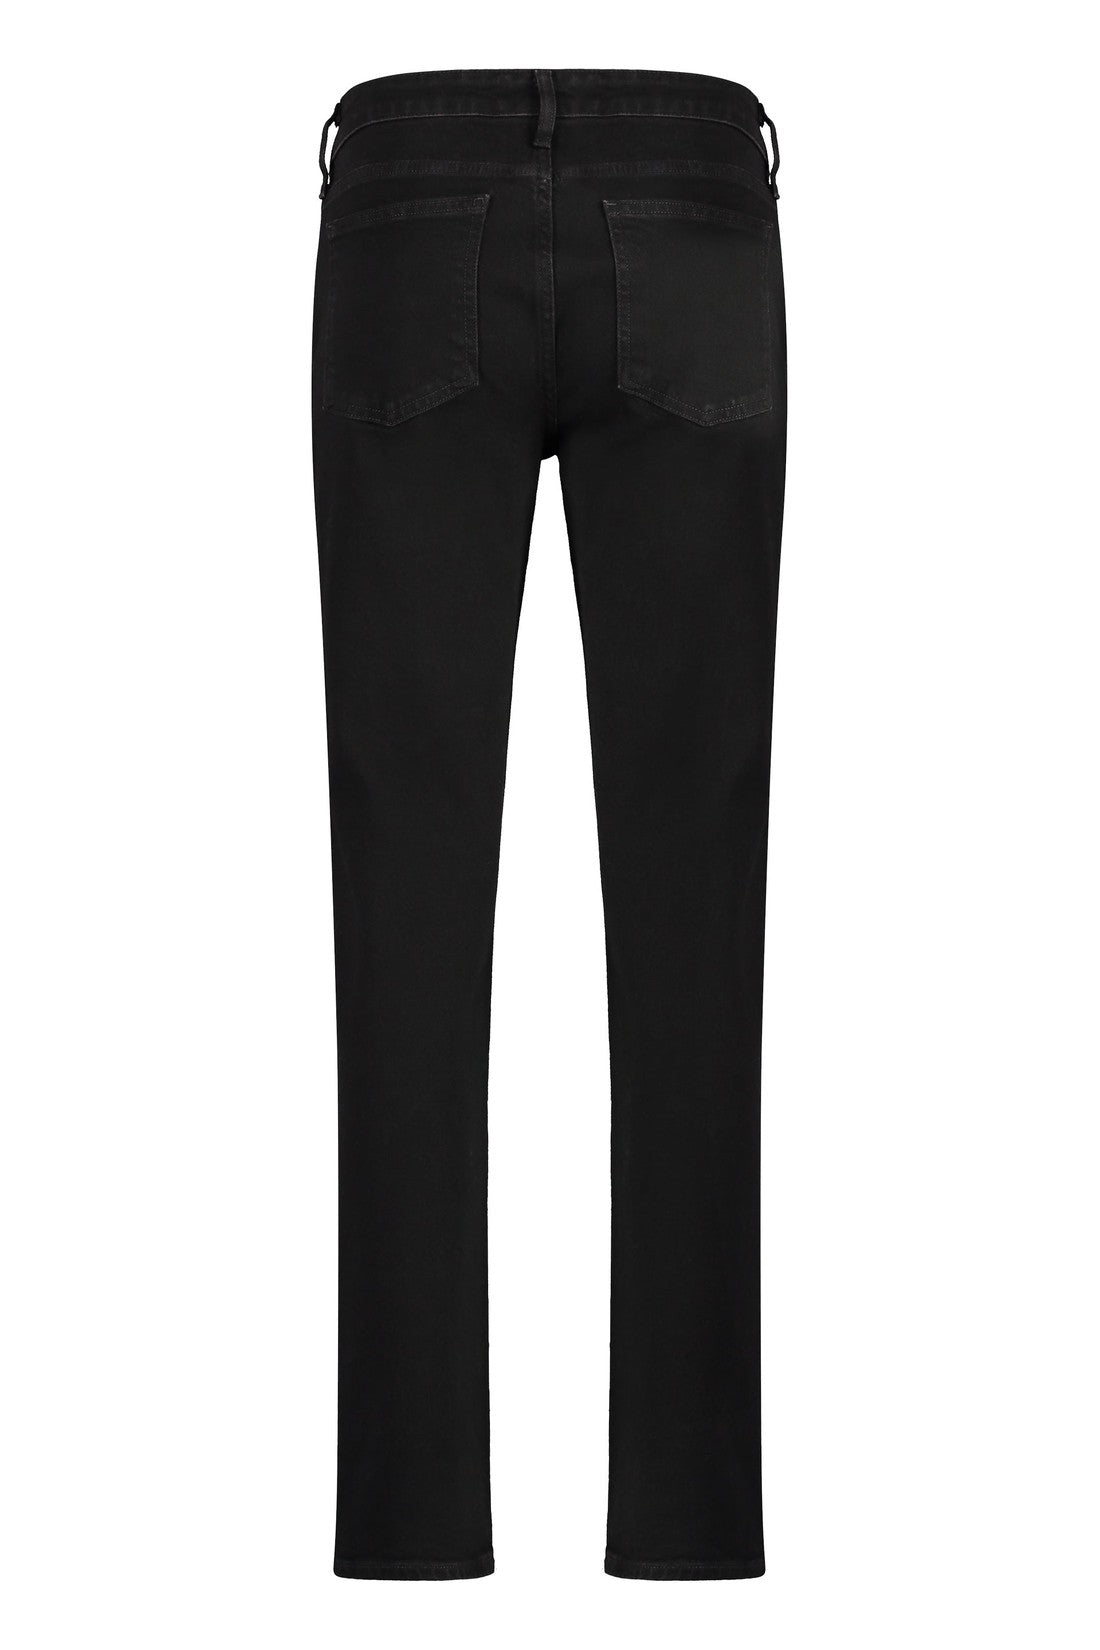 AGOLDE-OUTLET-SALE-Devon 5-pocket jeans-ARCHIVIST